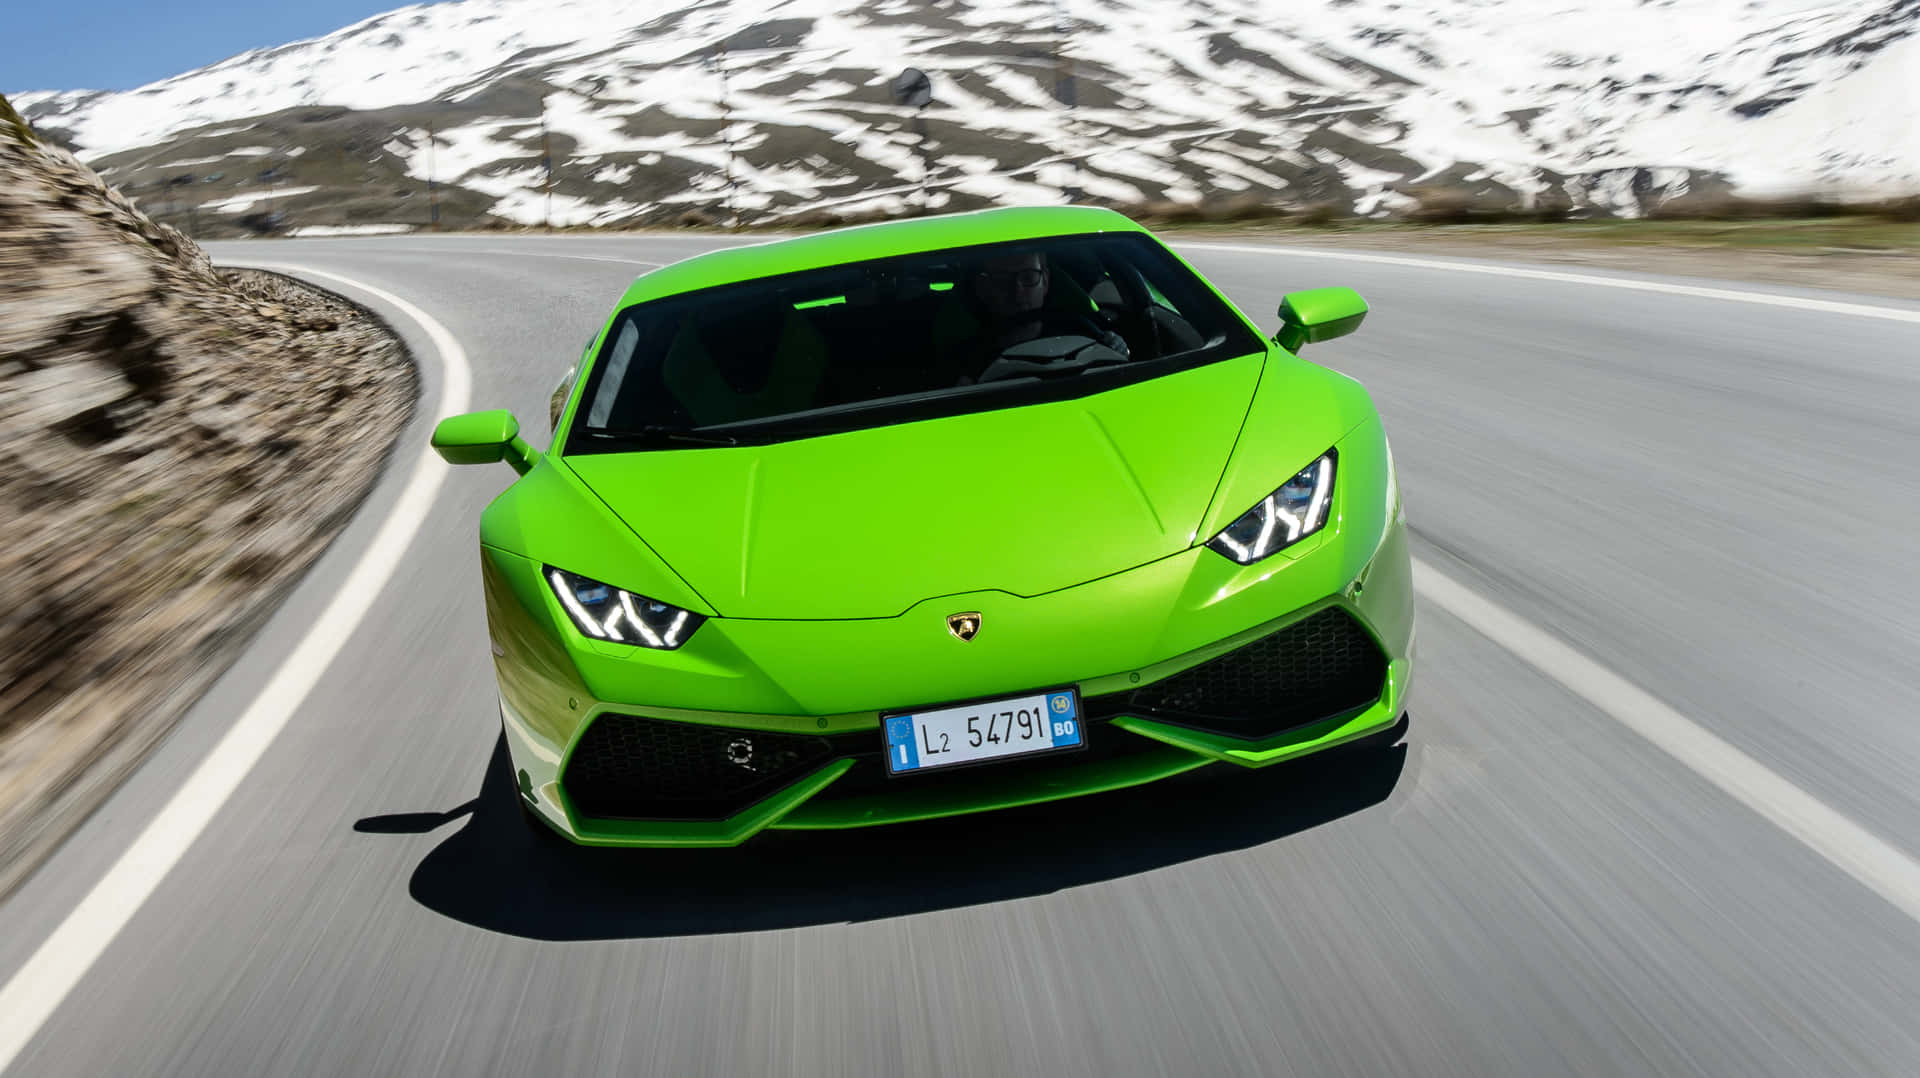 Conducircon Estilo: Lamborghinis Increíbles.